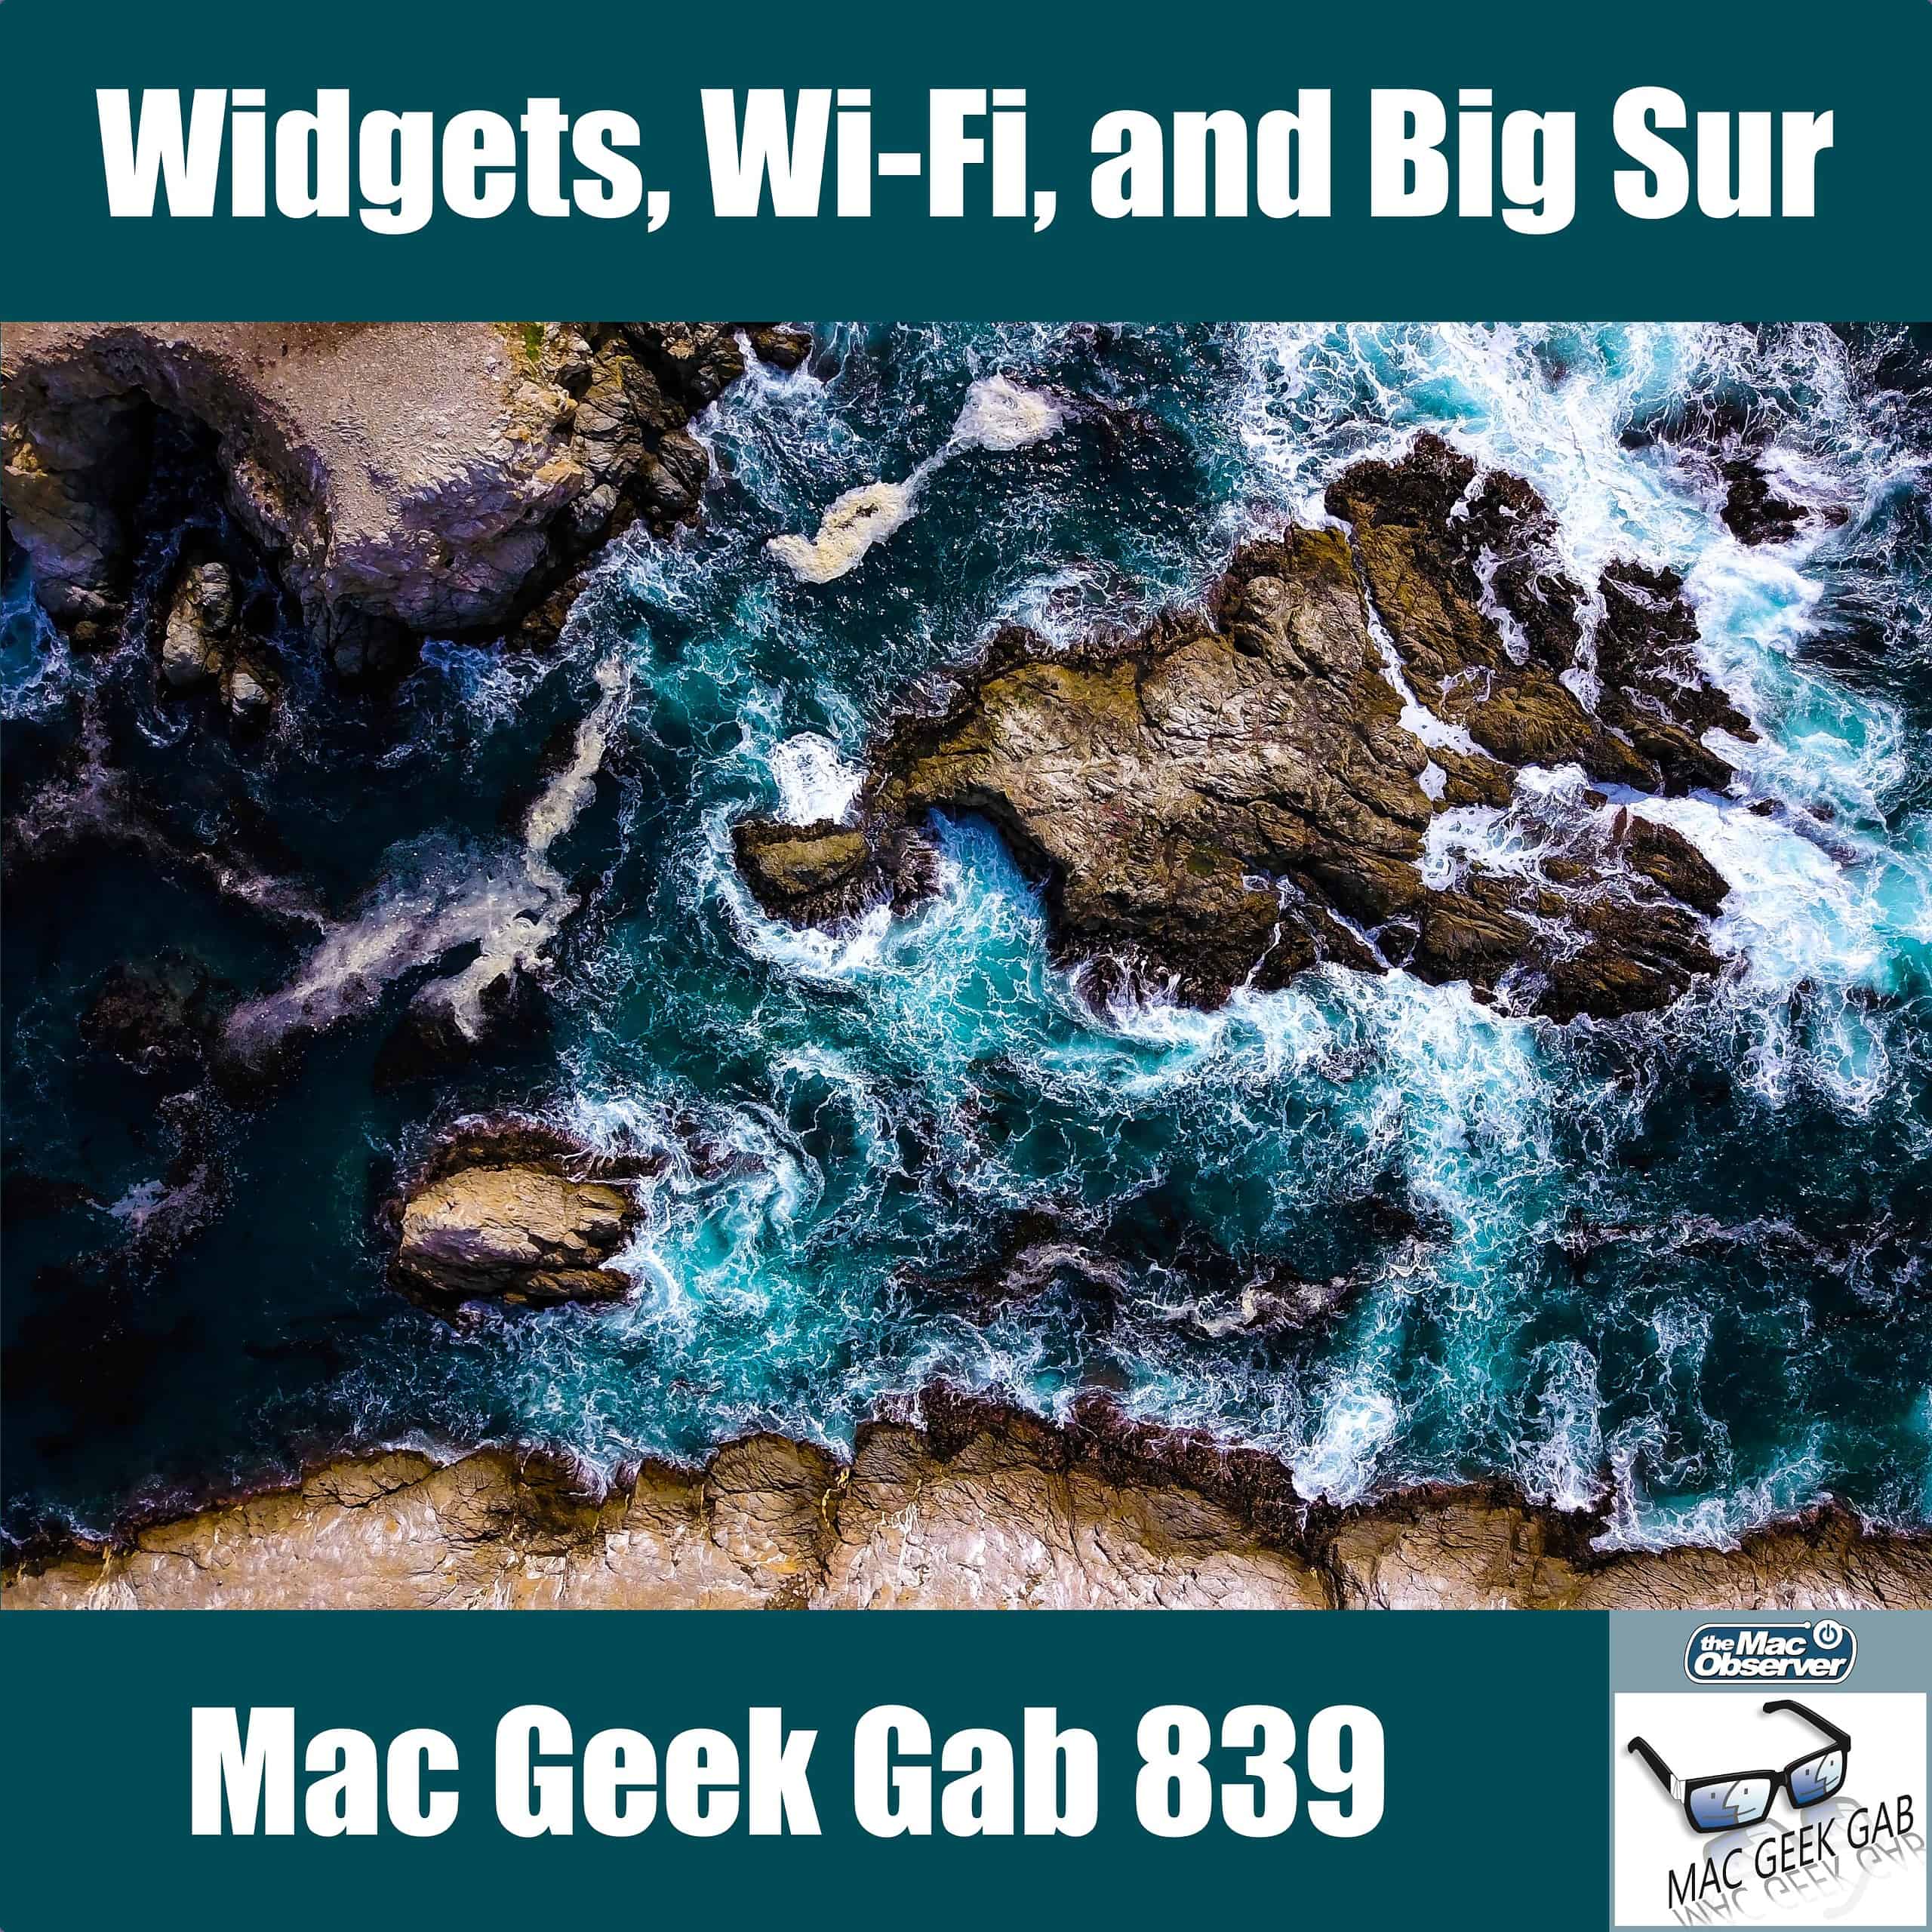 Widgets, Wi-Fi, and Big Sur — Mac Geek Gab 839